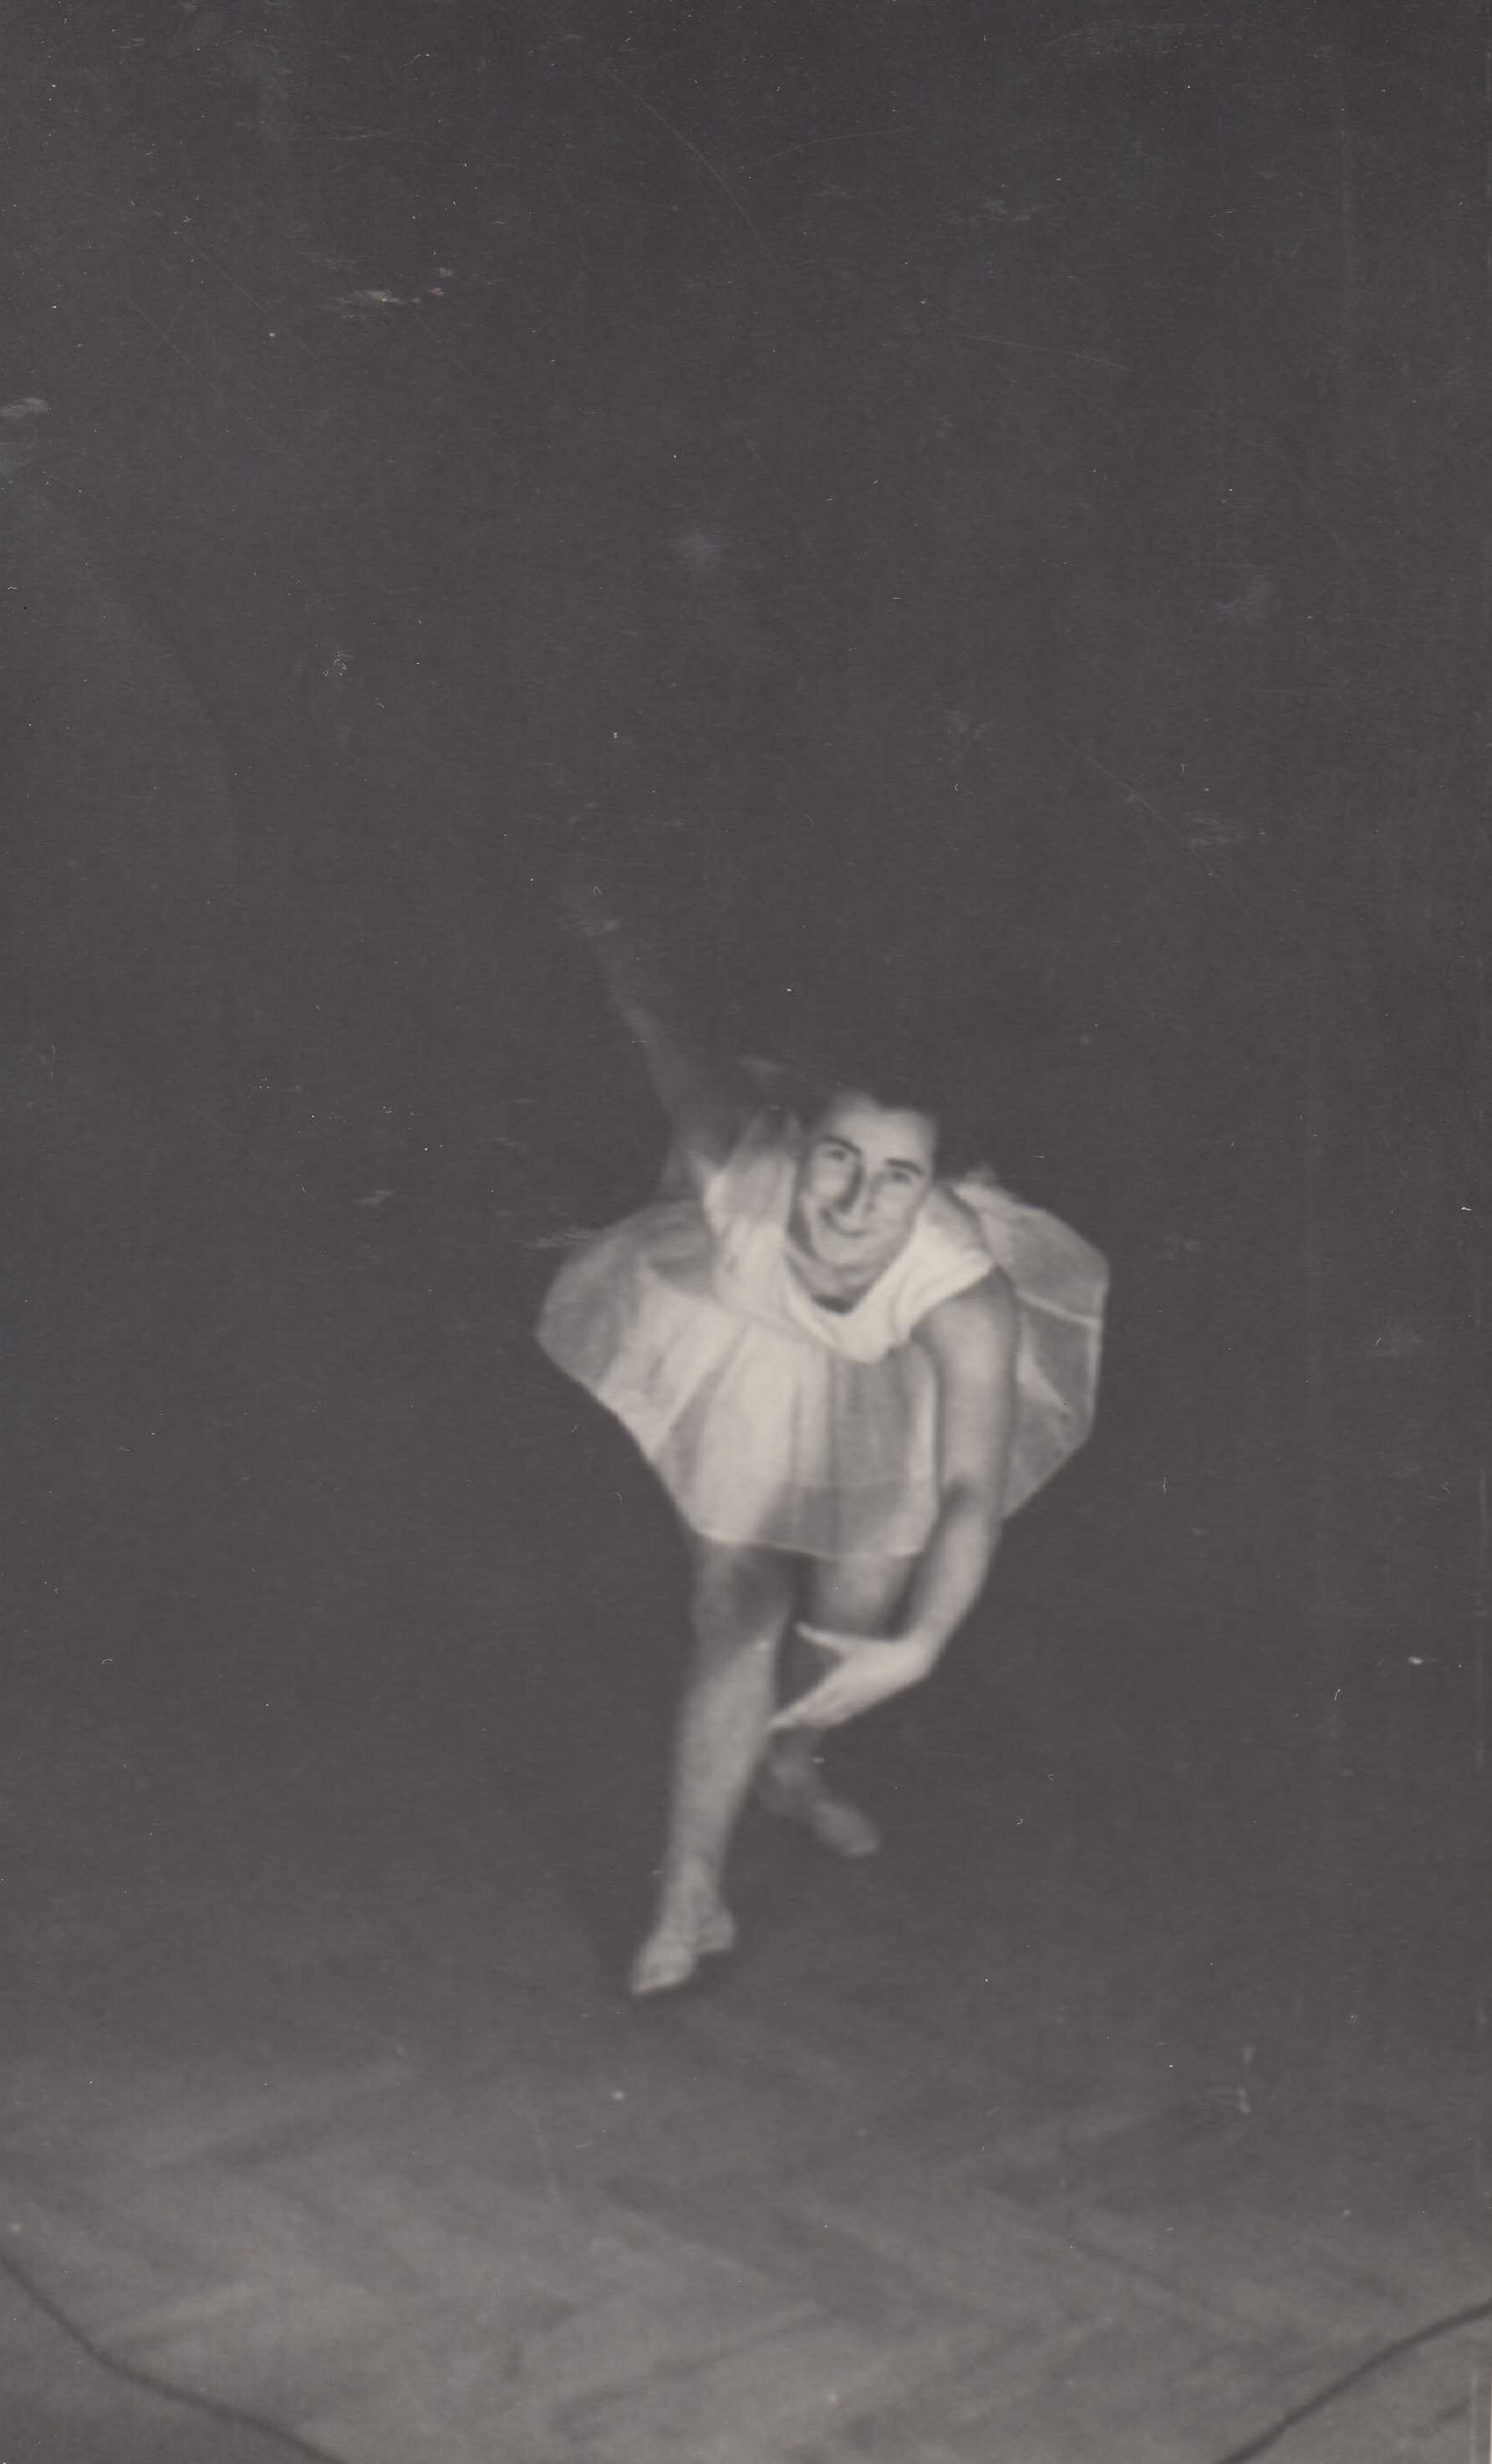 Sylva Knedlová, a ballet dancer